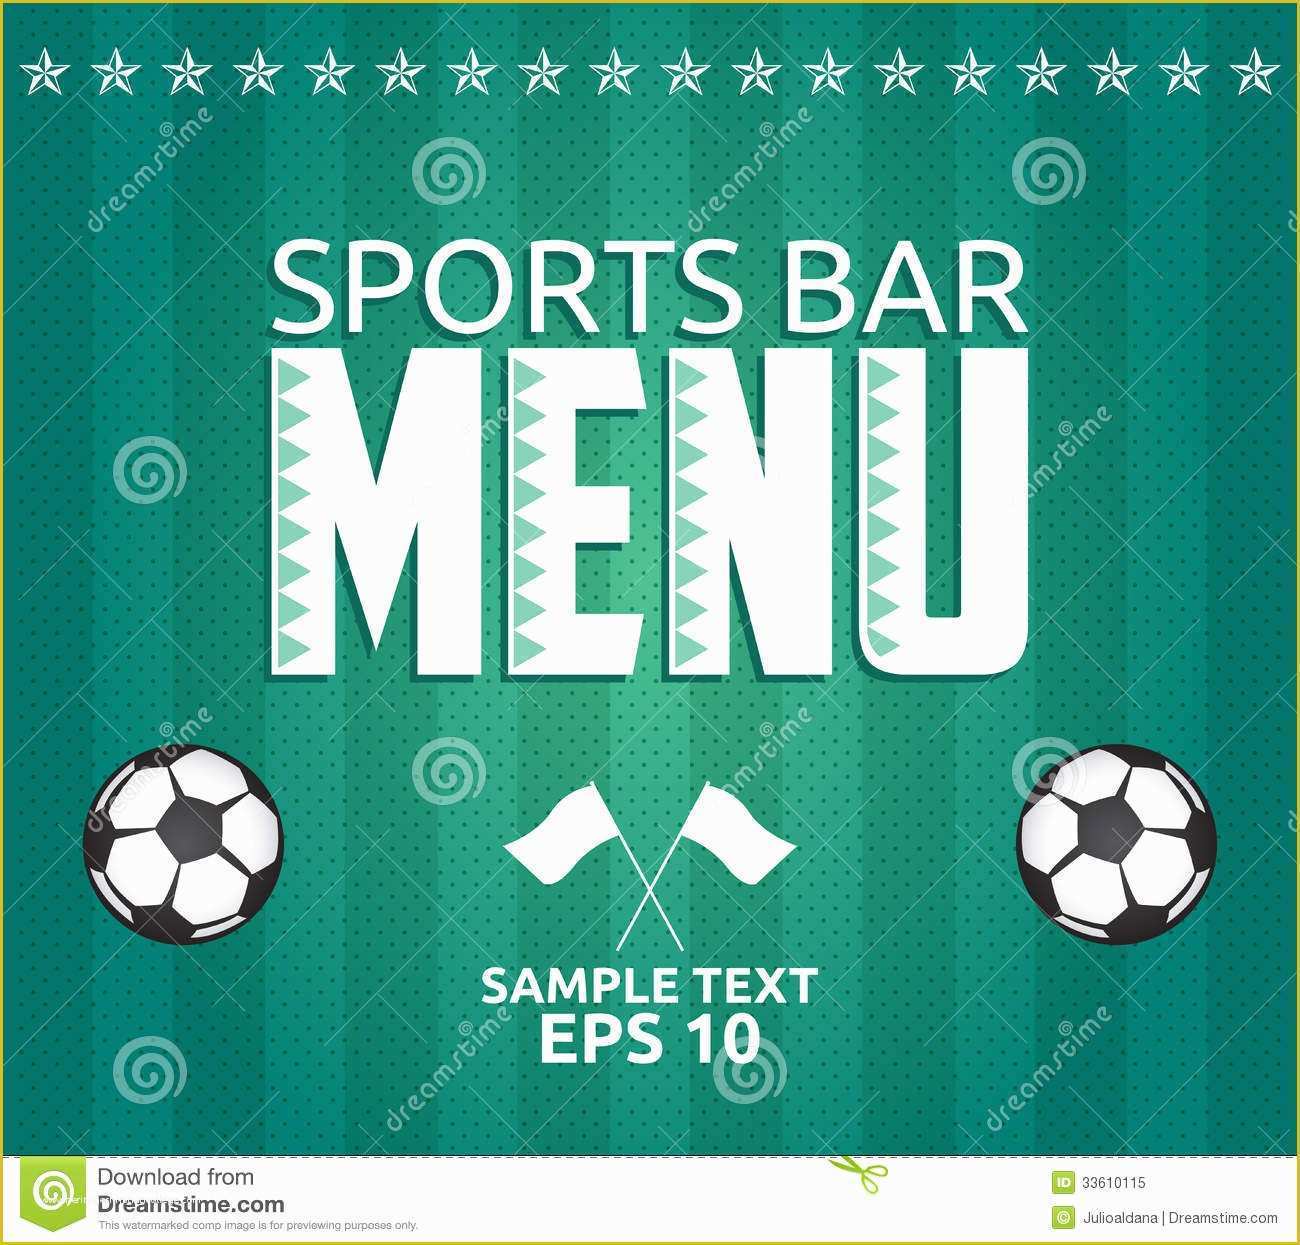 Sports Bar Business Plan Template Free Of Football Sports Bar Menu Card Design Template Royalty